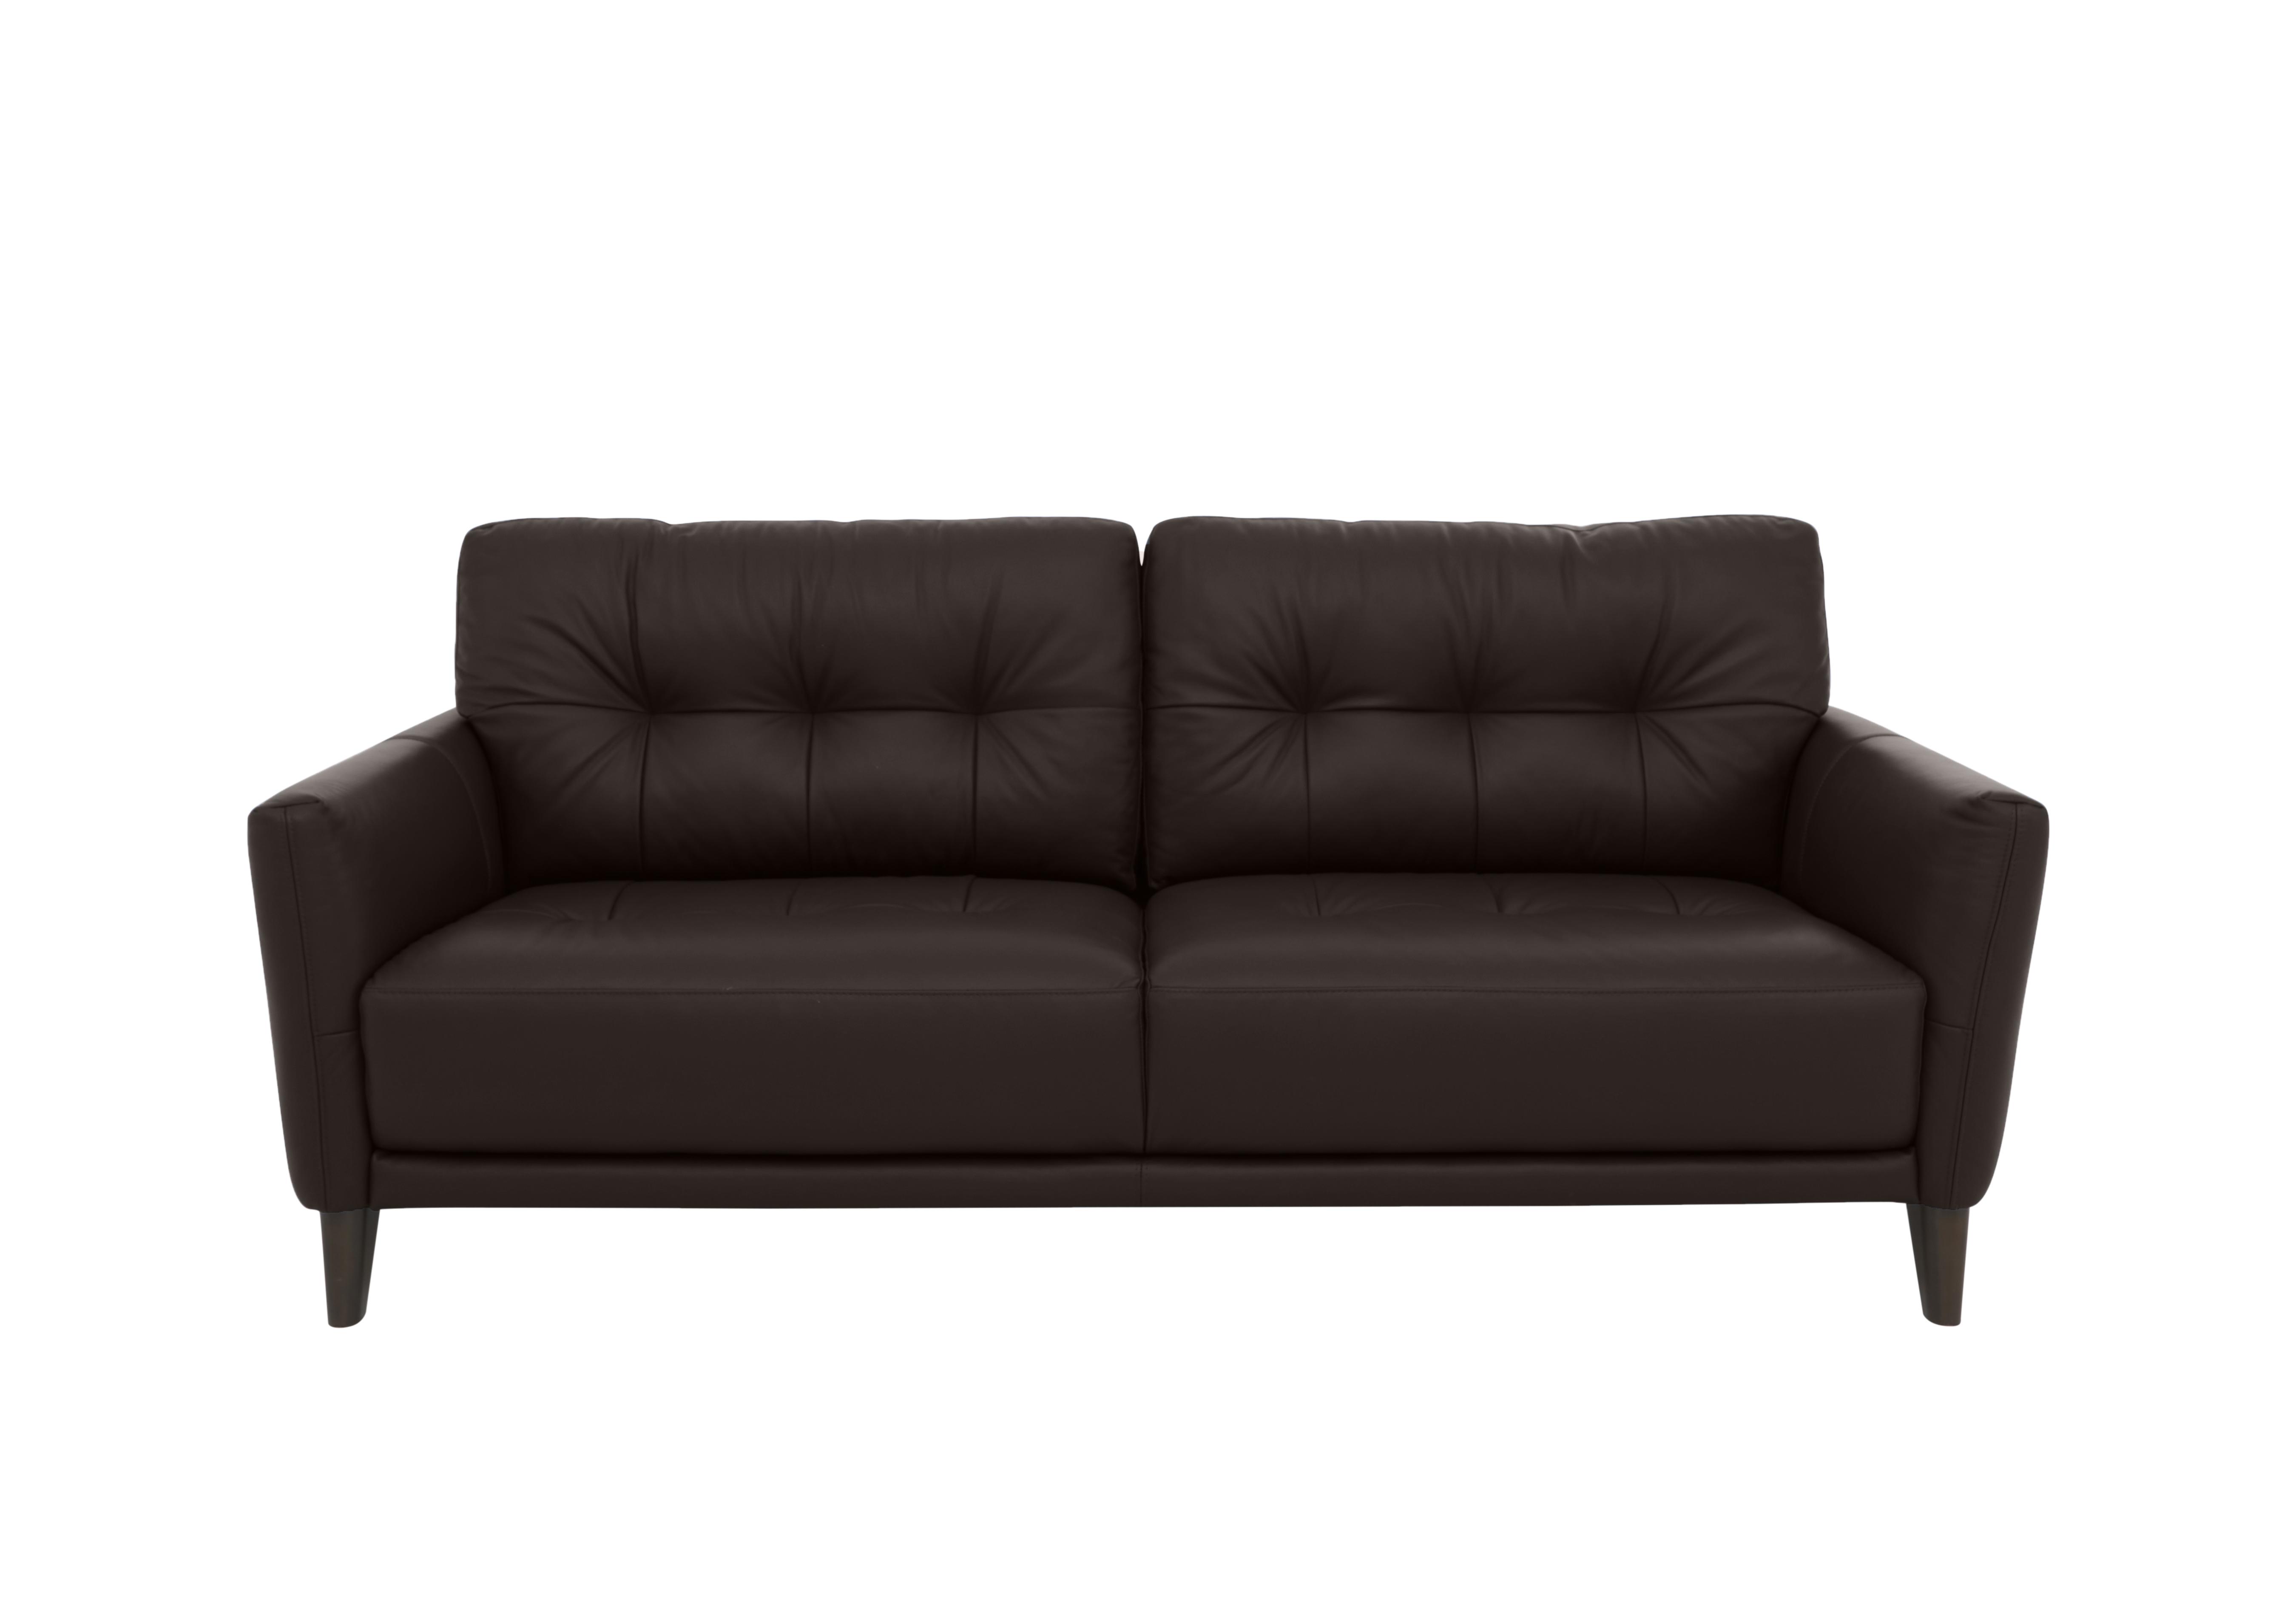 Uno Leather 3 Seater Sofa in Bv-1748 Dark Chocolate on Furniture Village